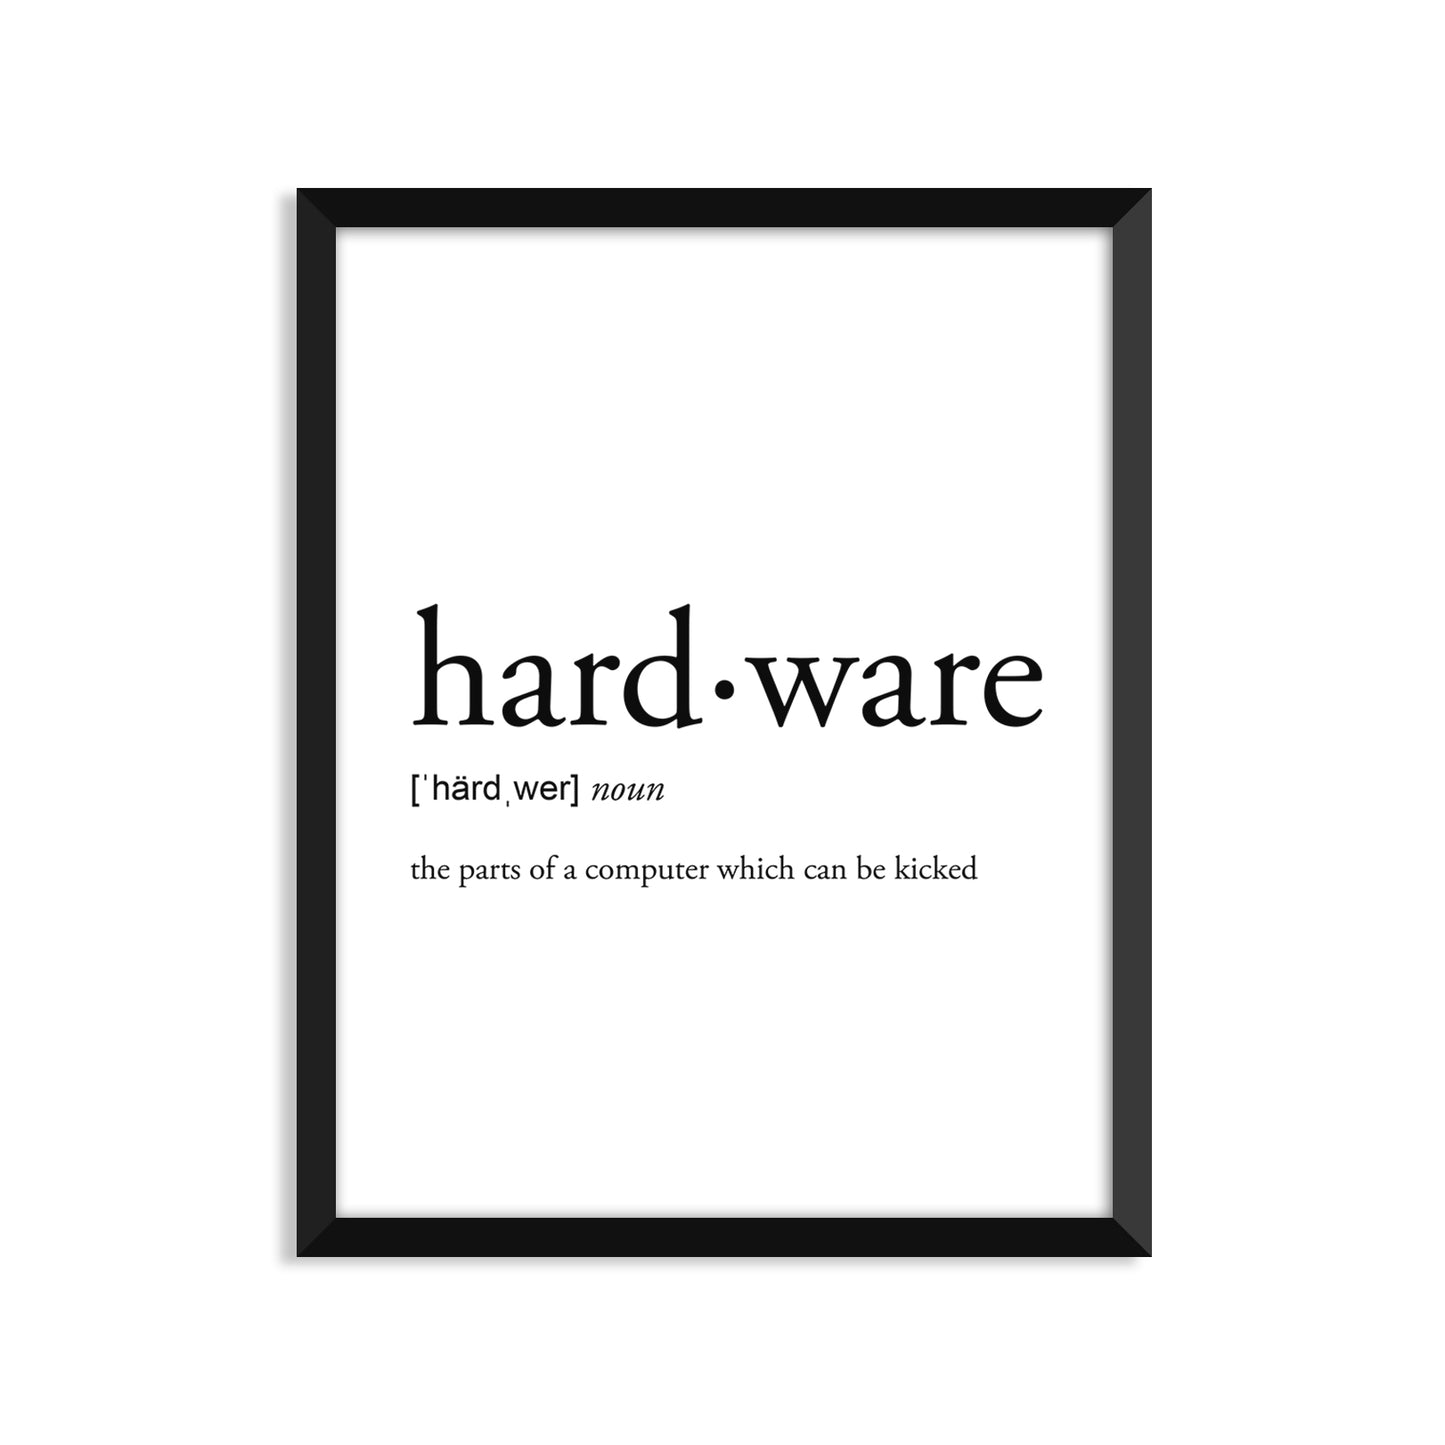 Hardware Definition - Unframed Art Print Or Greeting Card